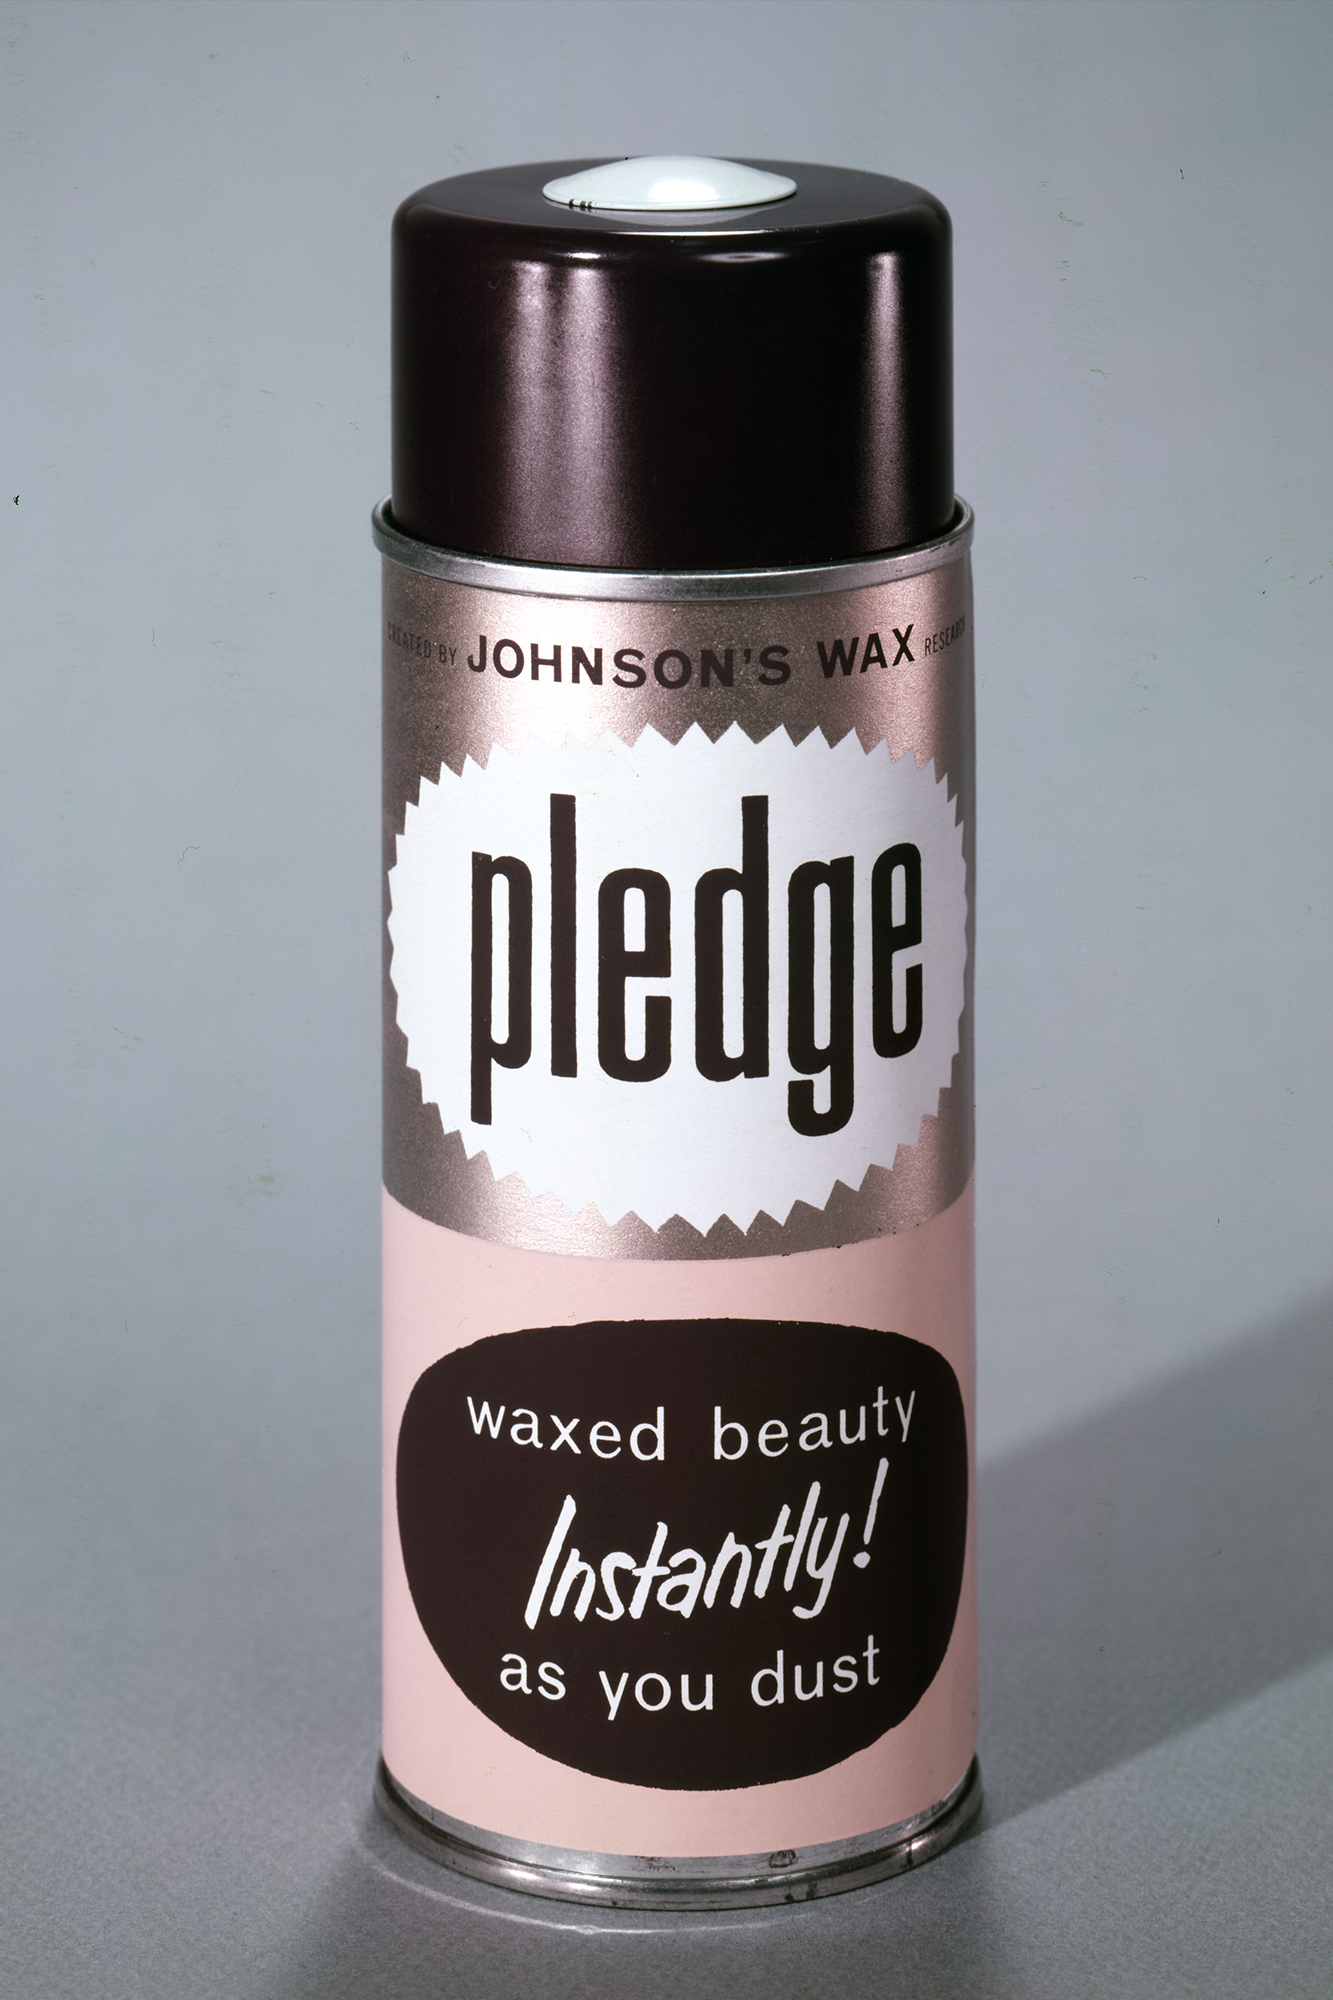 Johnson’s Wax 1958 vintage ad for Pledge furniture polish